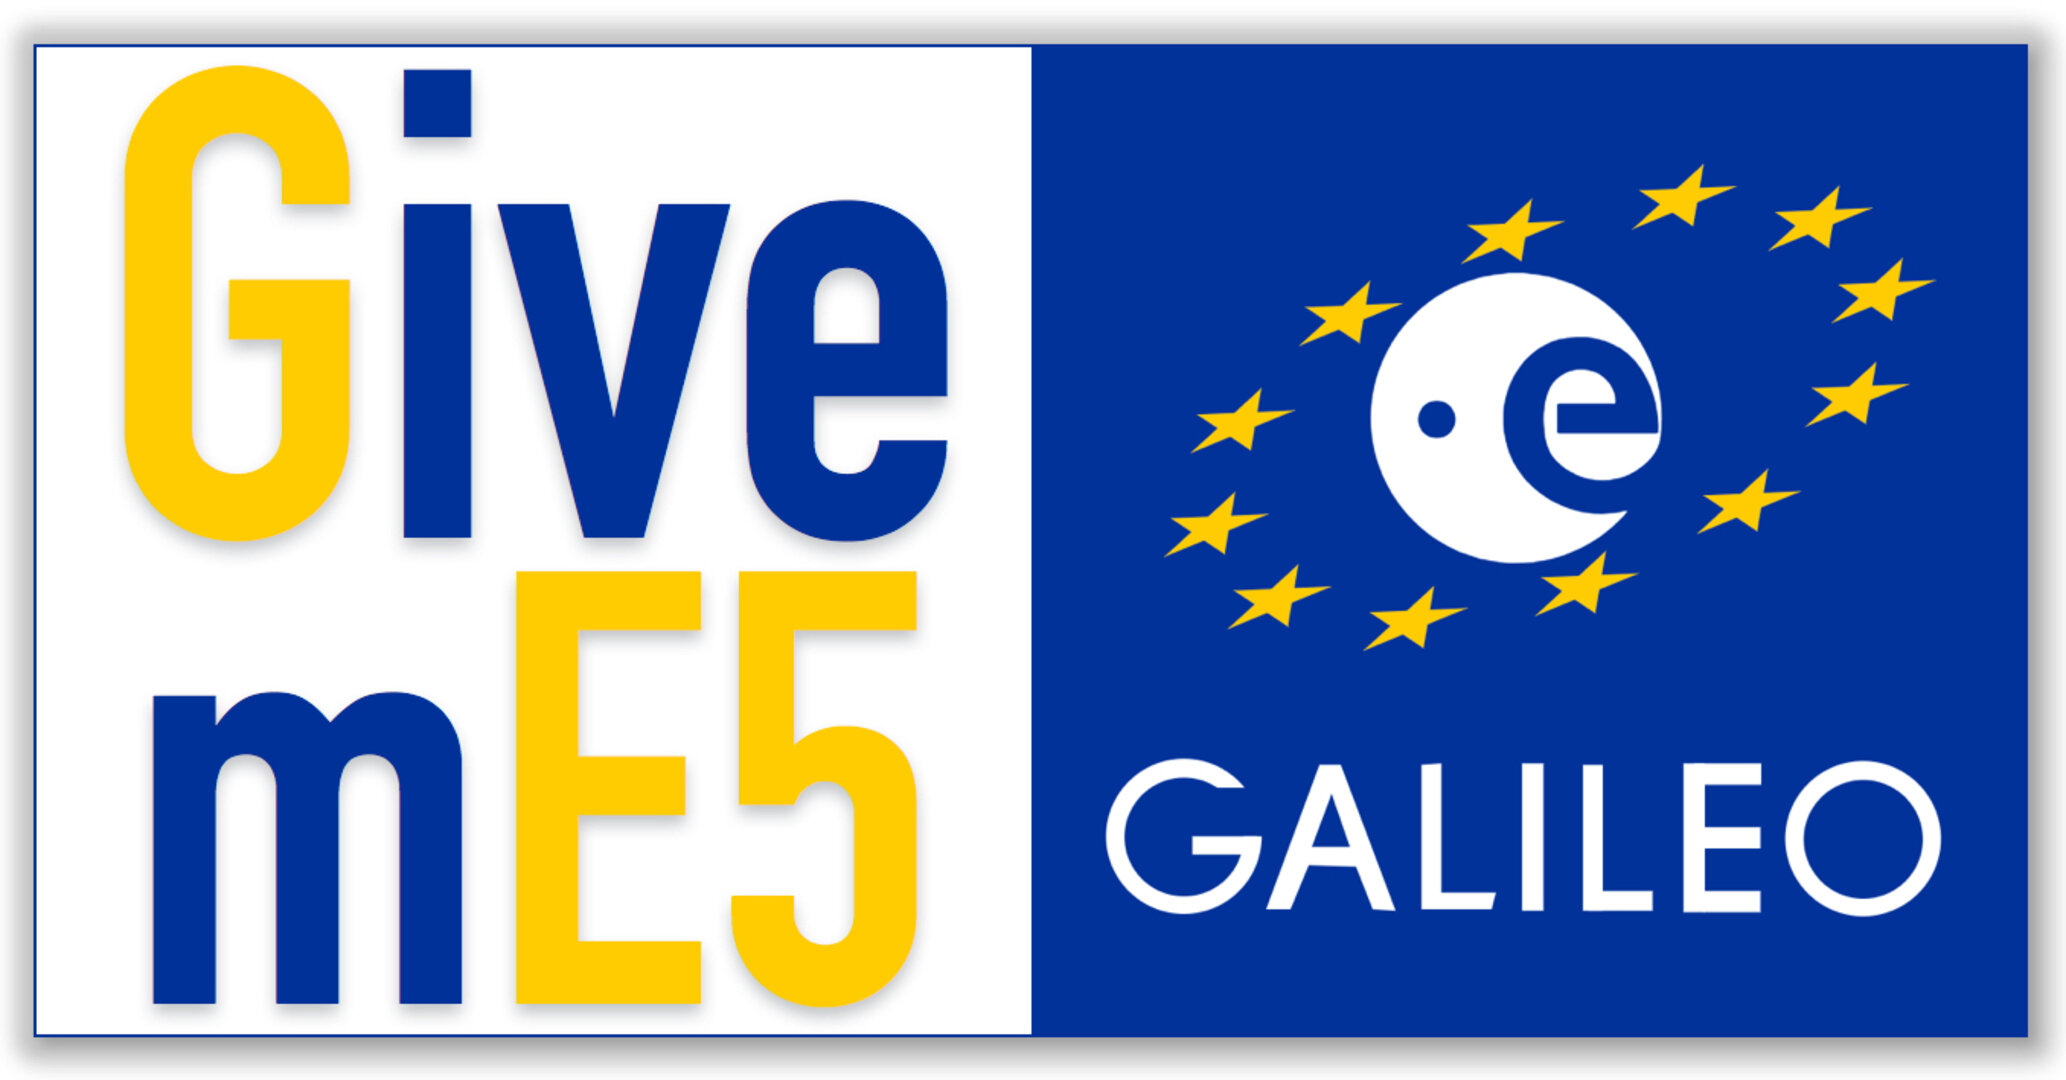 "Galileo give mE5"